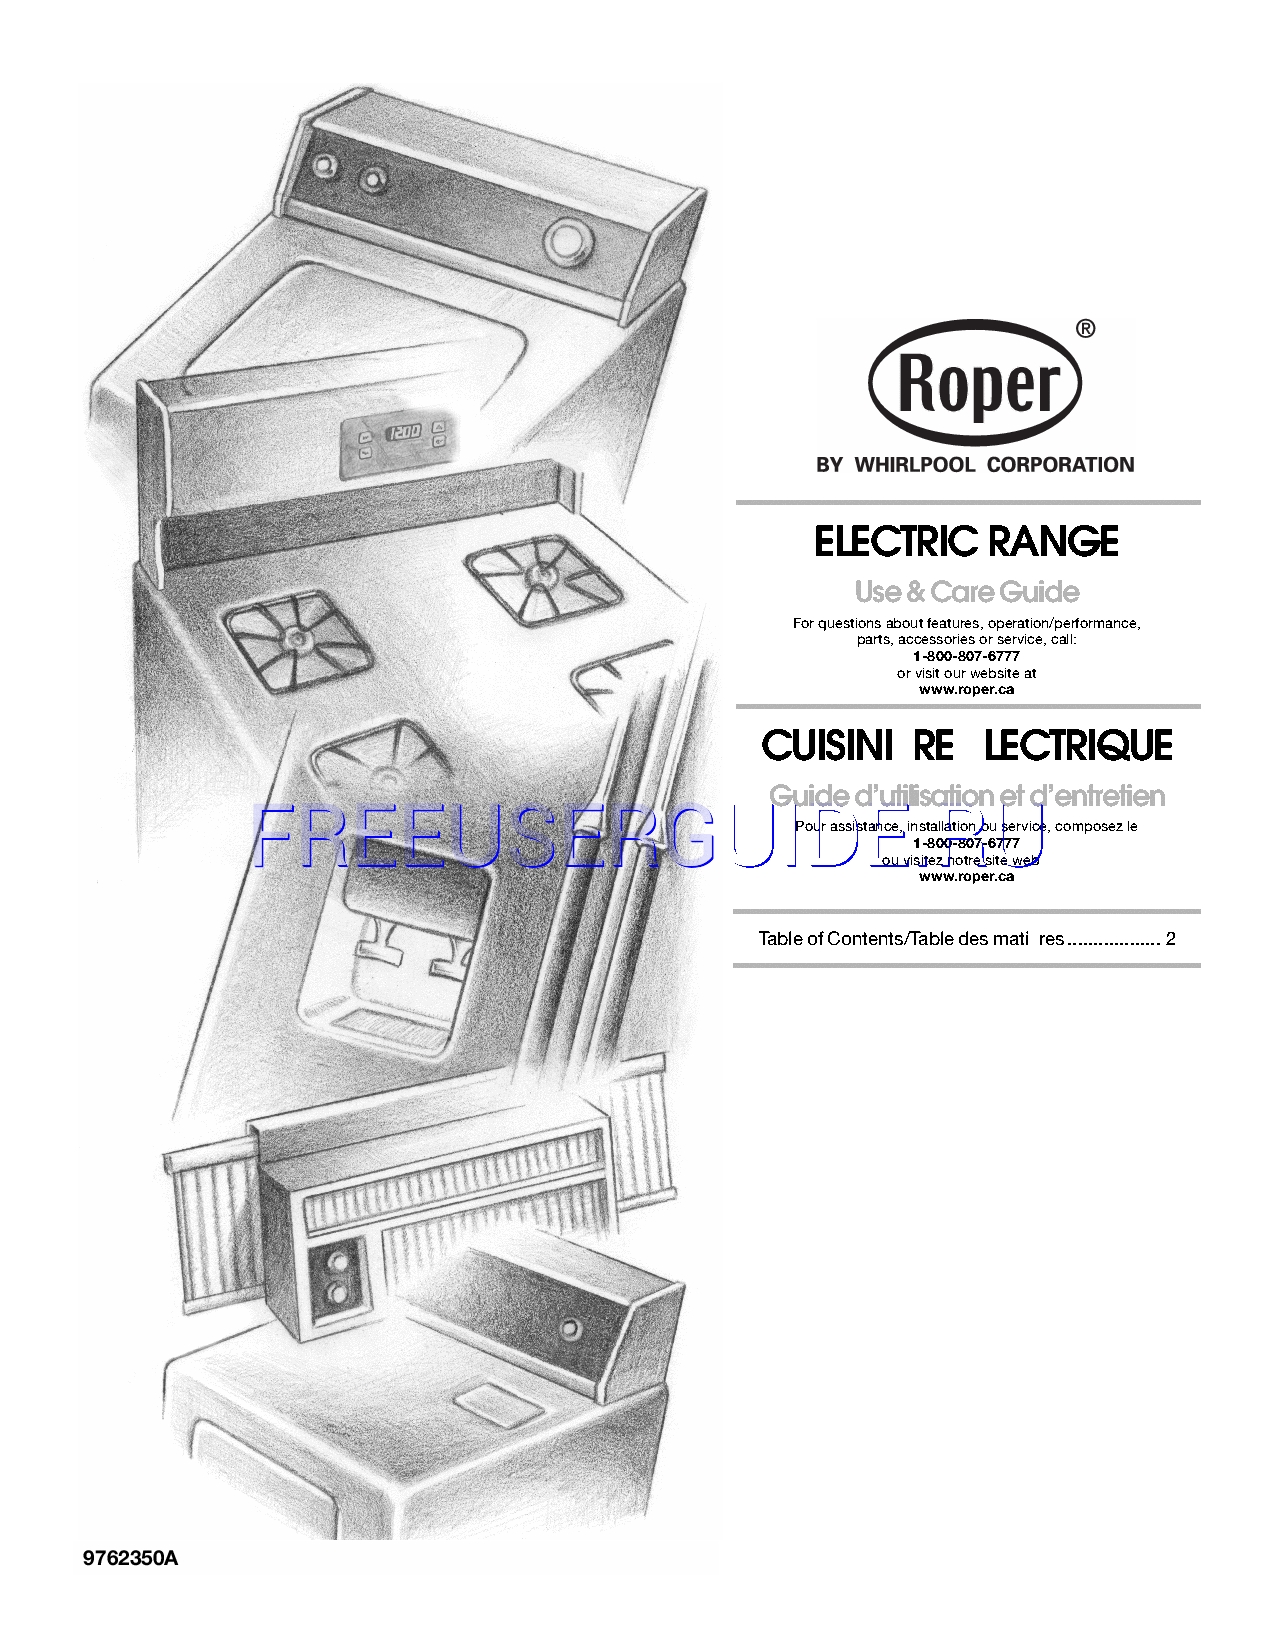 Leer online Manual de usuario para Whirlpool Roper RME30002 (Page 1)